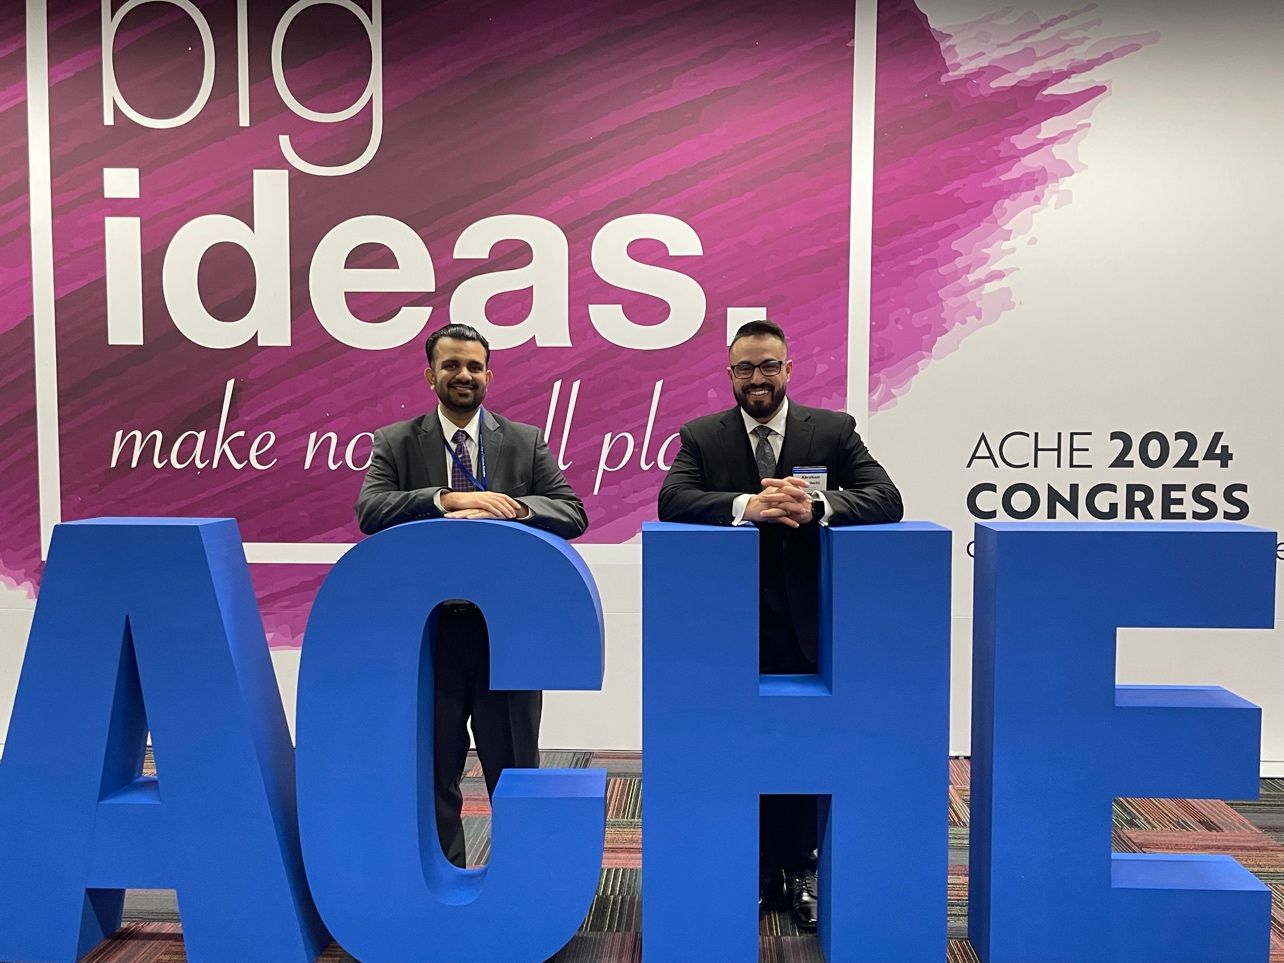 ACHE Congress Chicago: Elevating Healthcare Leadership through ＂Big Ideas＂